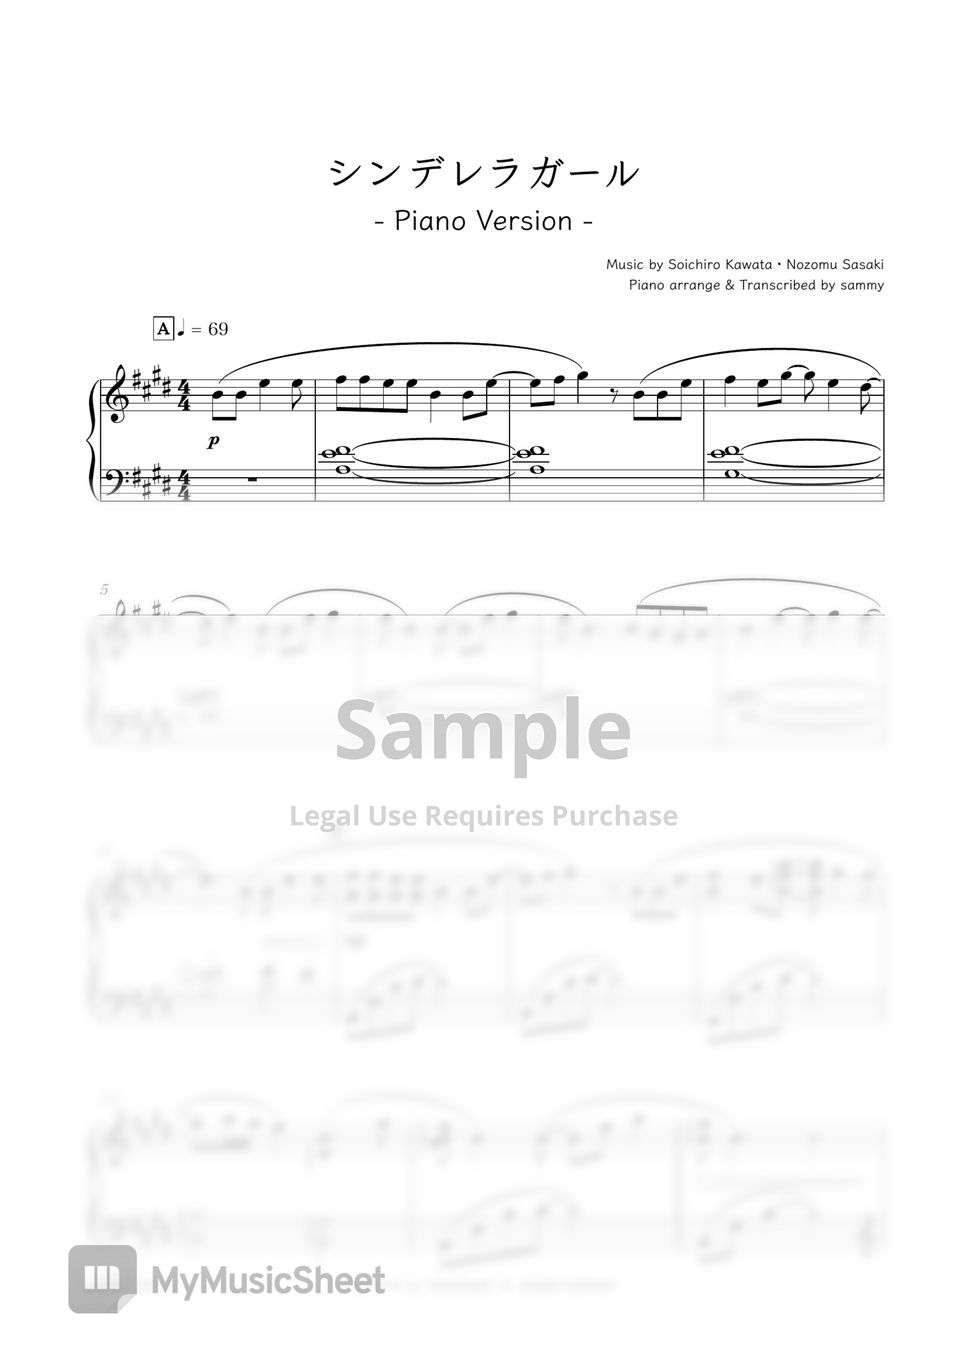 King & Prince - シンデレラガール -Piano Version by sammy